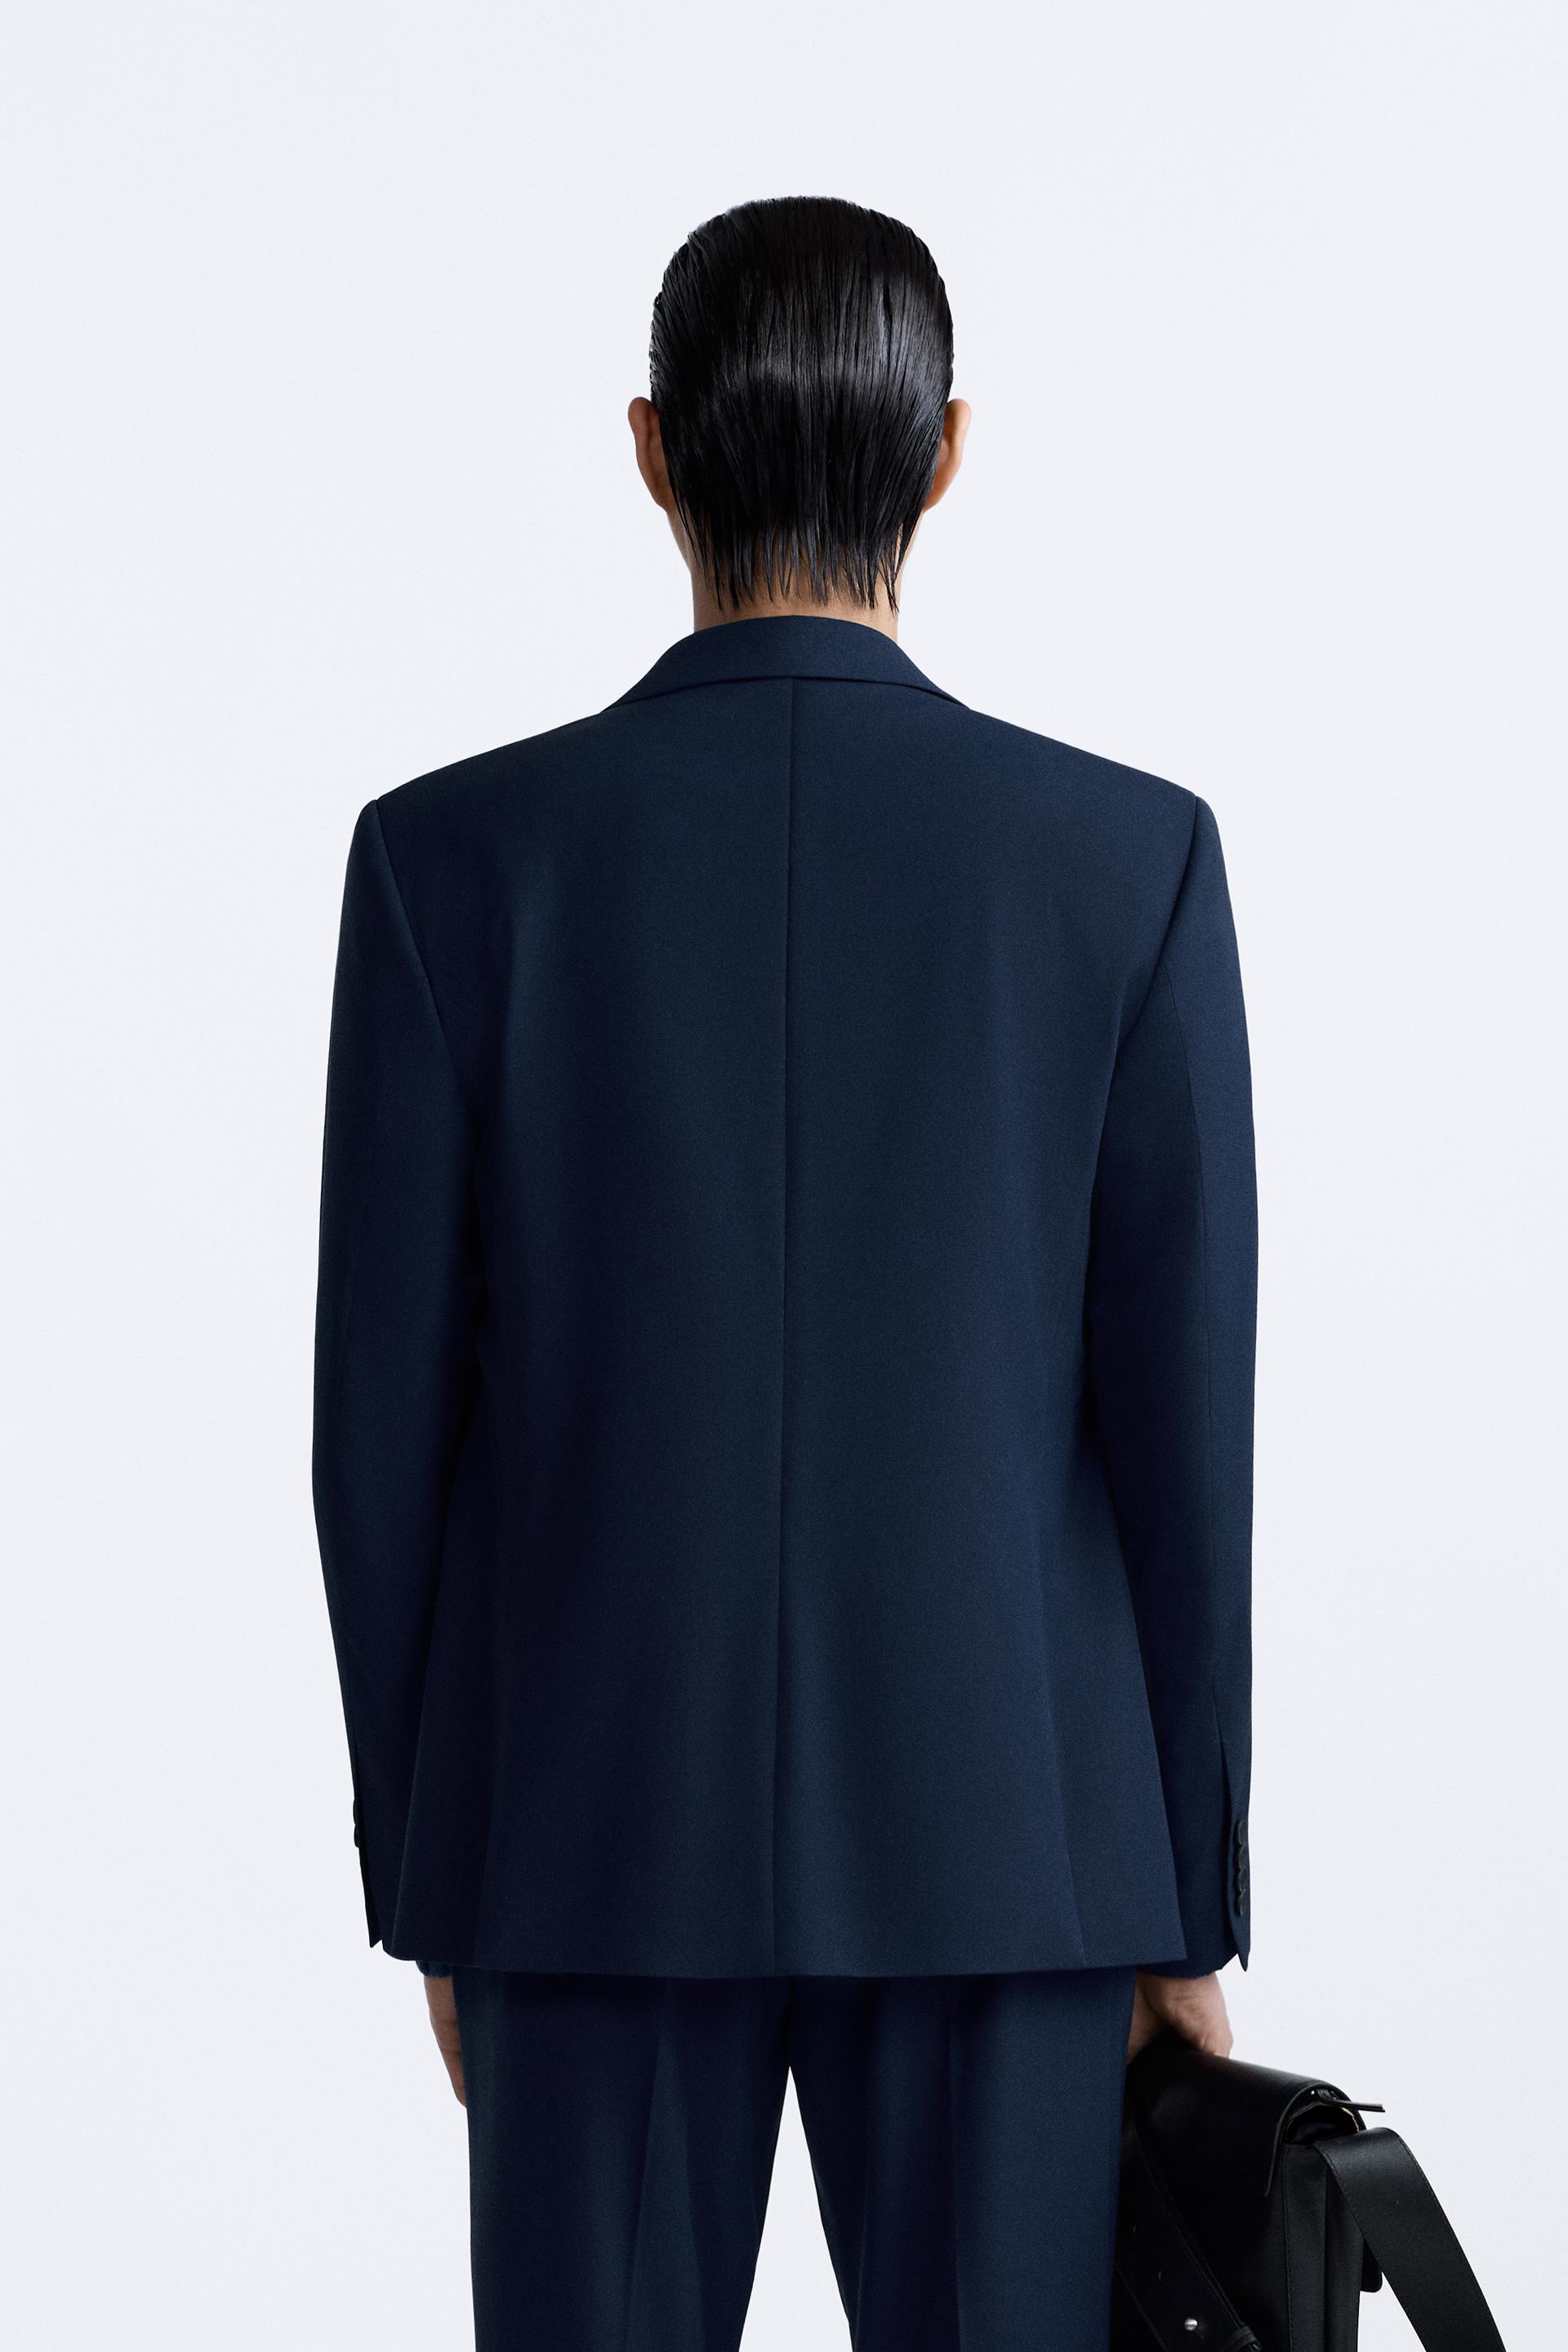 Zara Man Velvet Blazer Suit Jacket Sport Coat Navy Blue 1792/305 Size XL  Slim